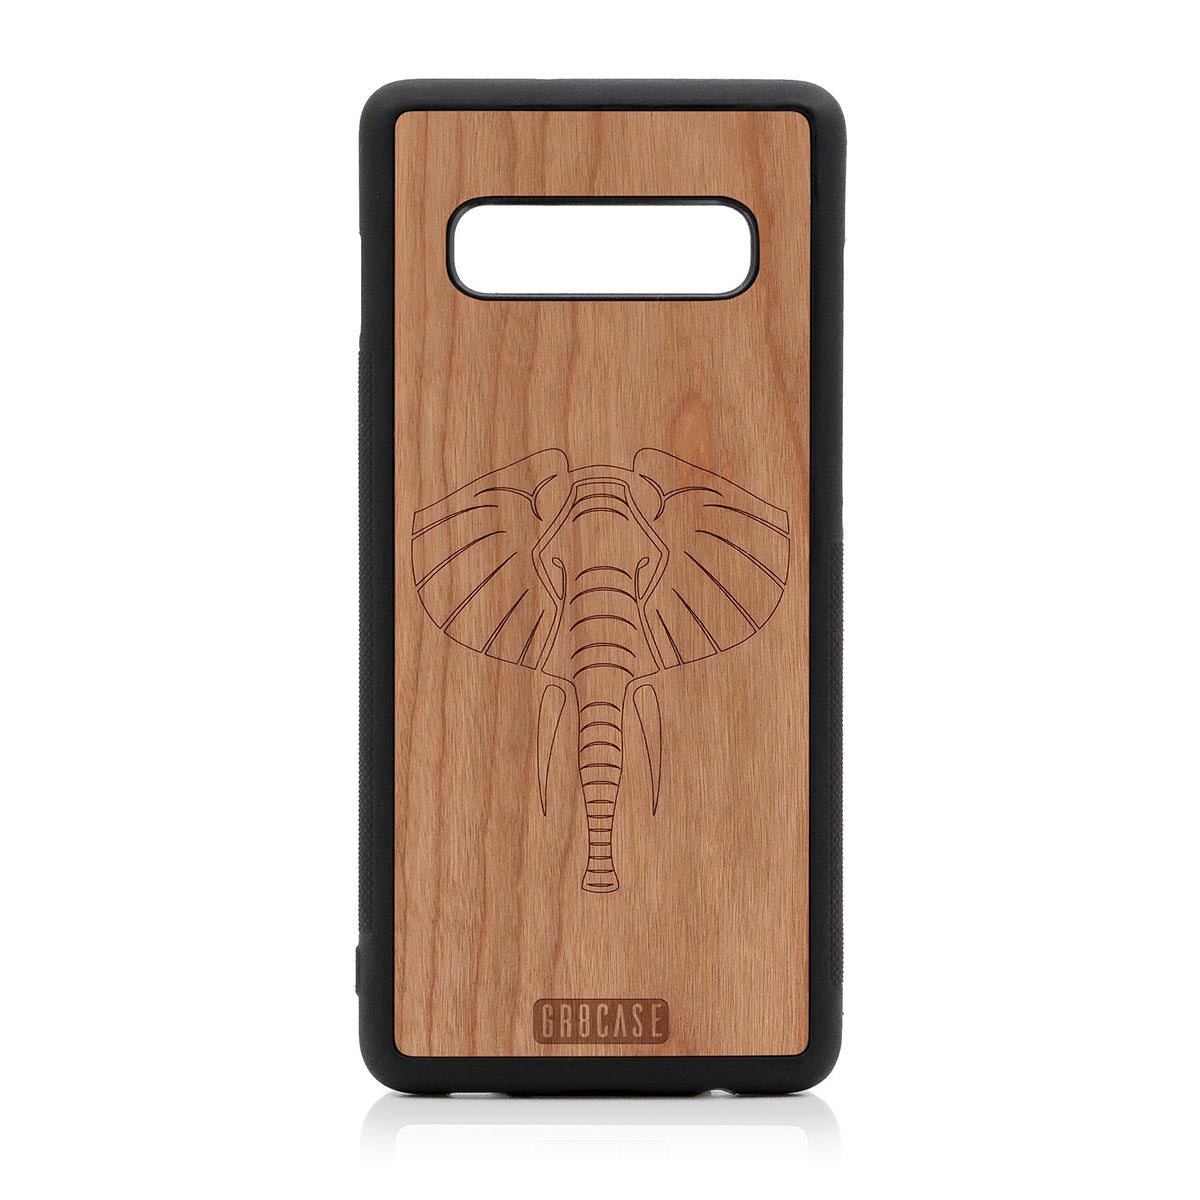 Elephant Design Wood Case Samsung Galaxy S10 Plus by GR8CASE